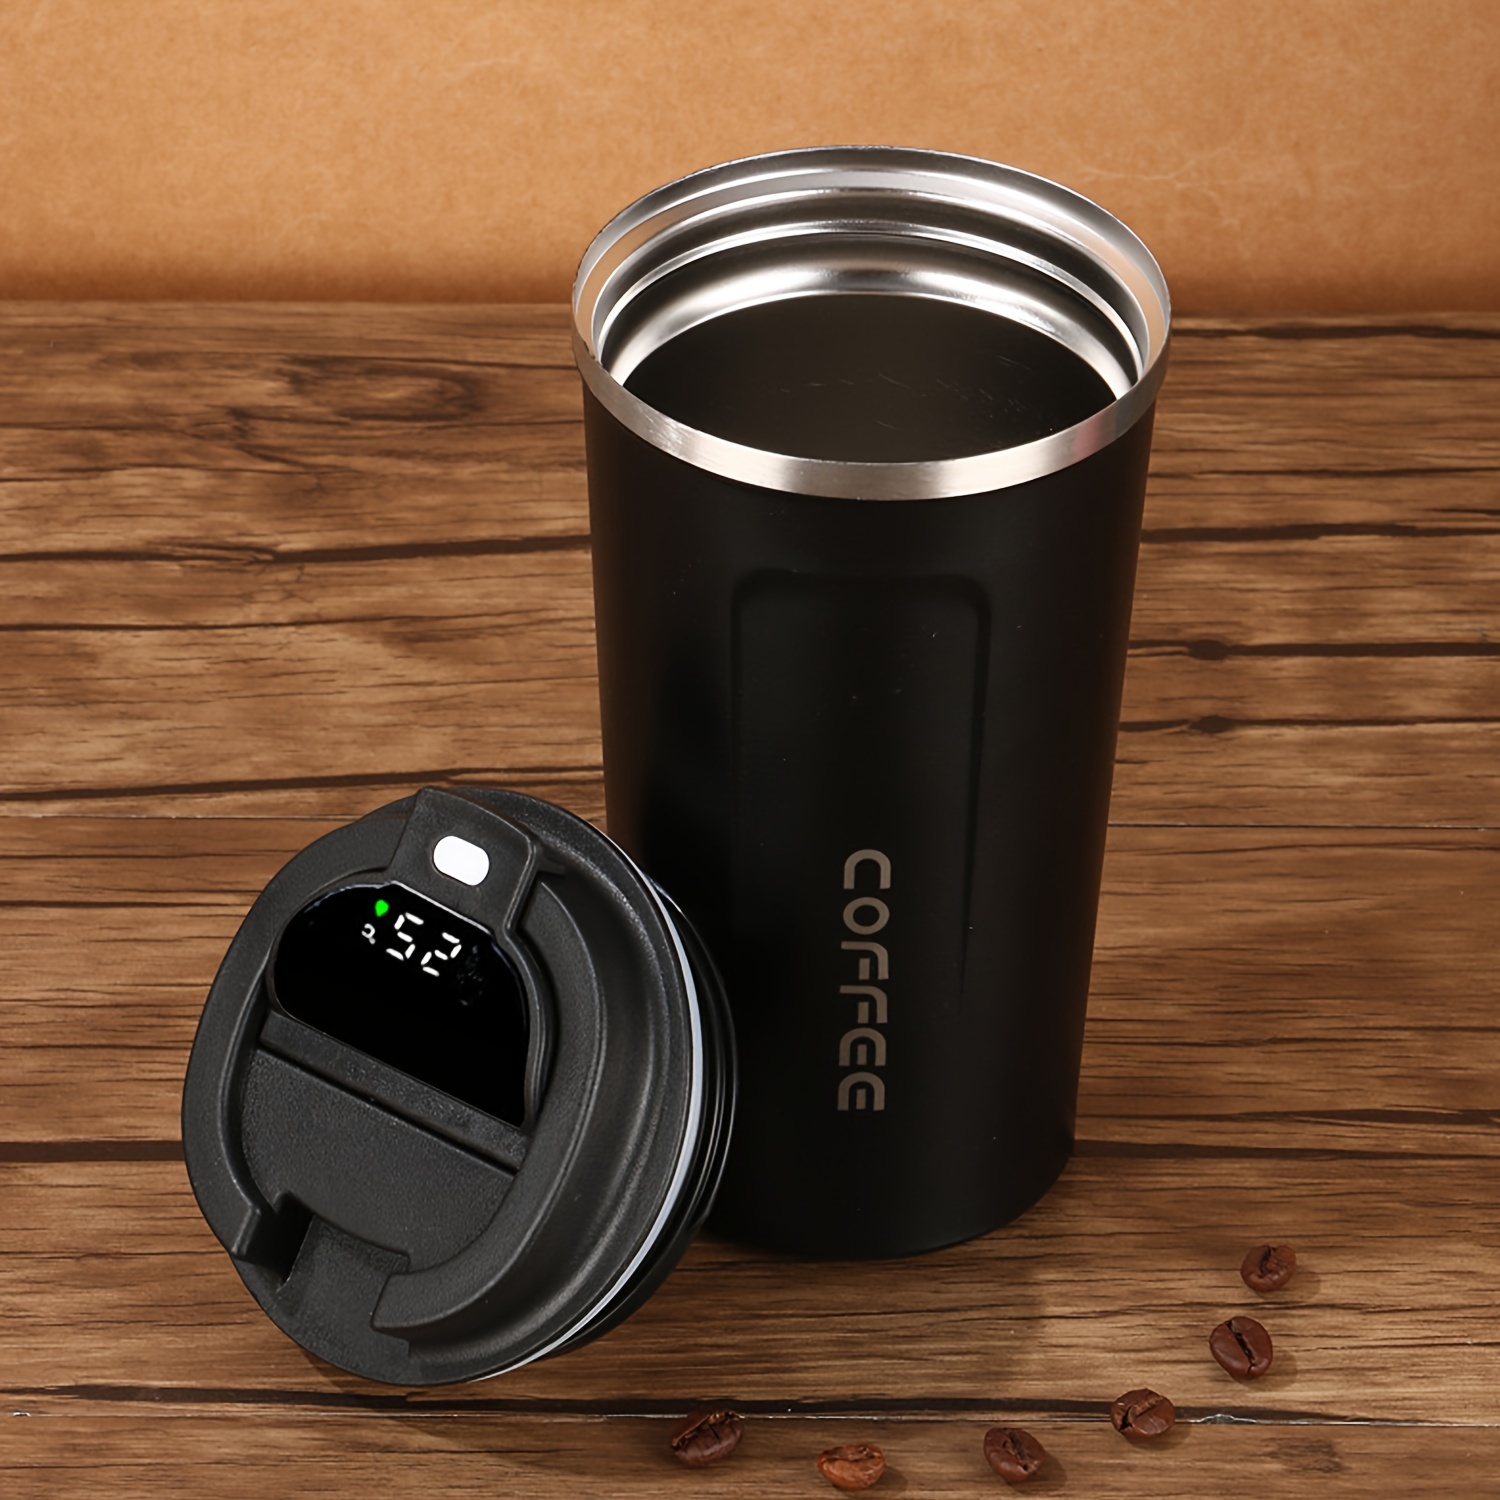 Kaufe 510 ml Kaffeetasse, intelligente LED-Anzeige, Temperatur